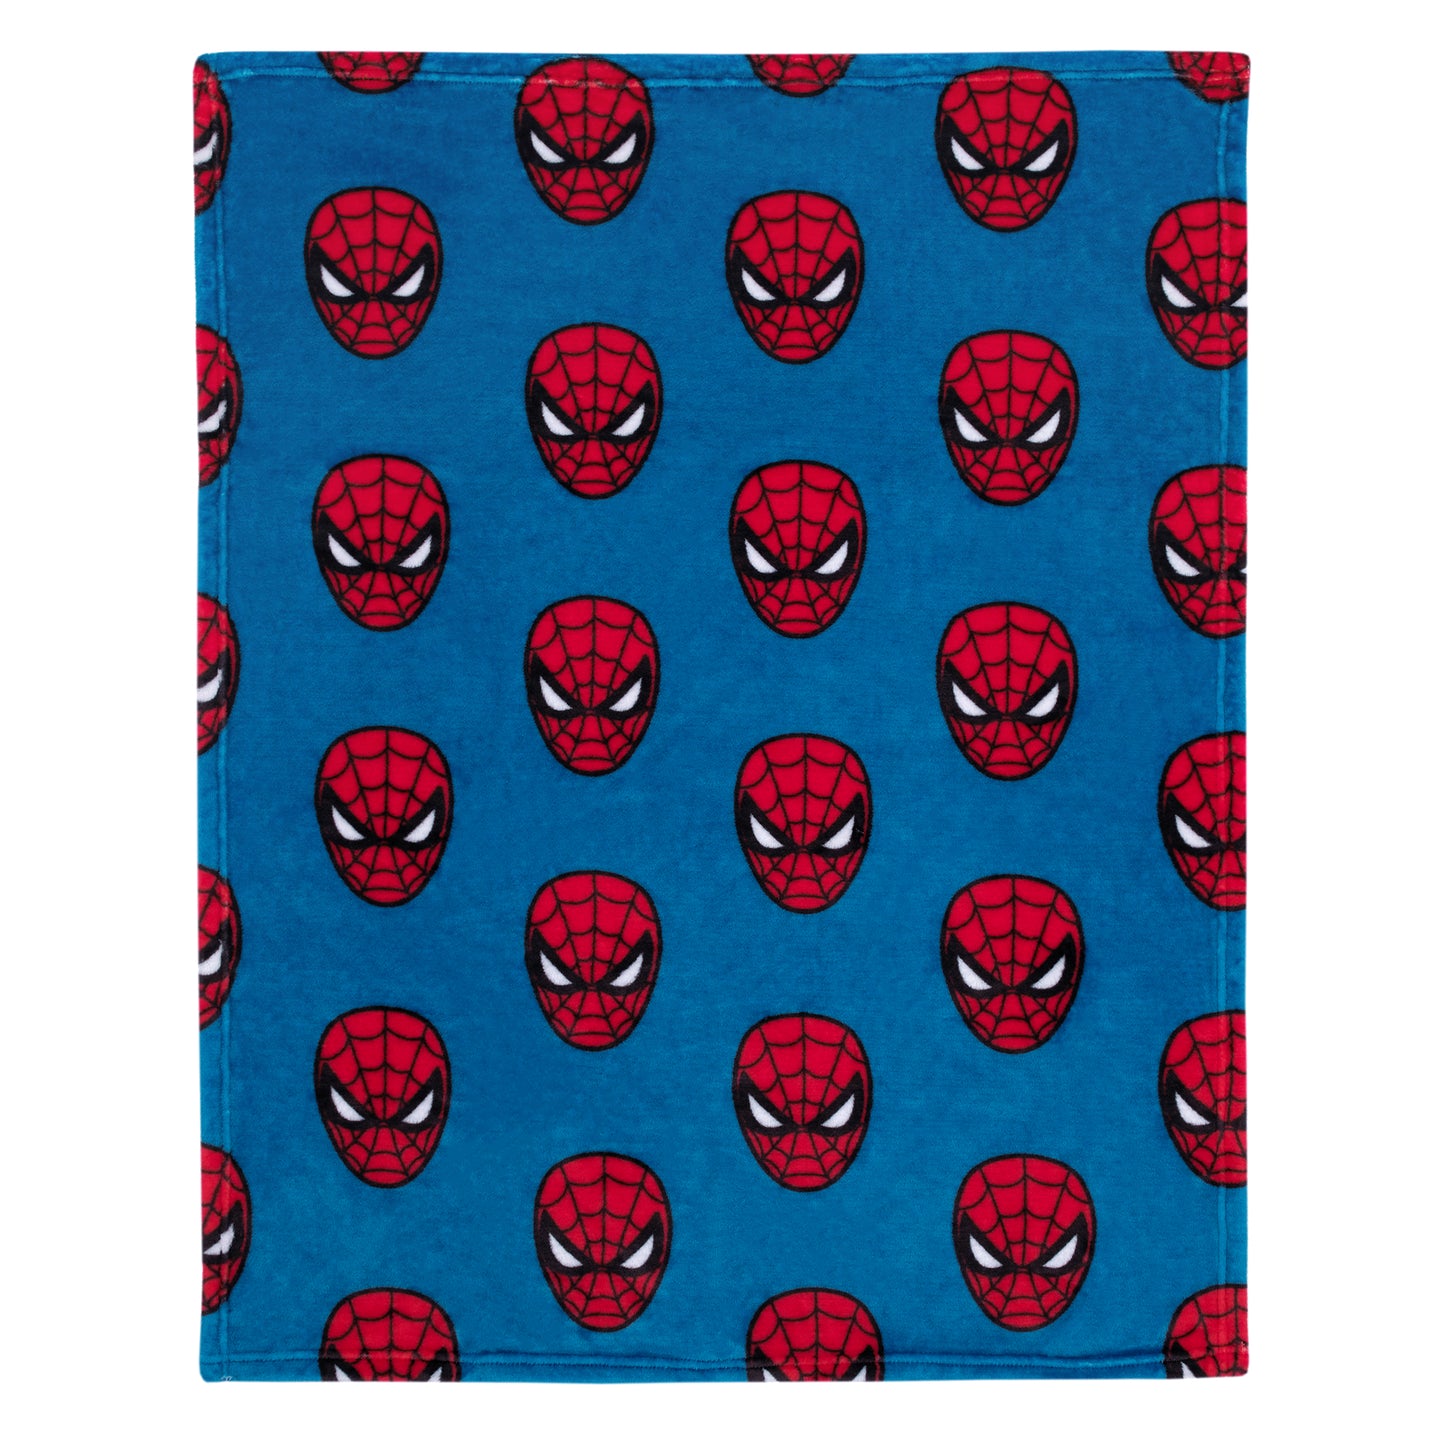 Marvel Spiderman Royal Blue and Red Super Soft Baby Blanket